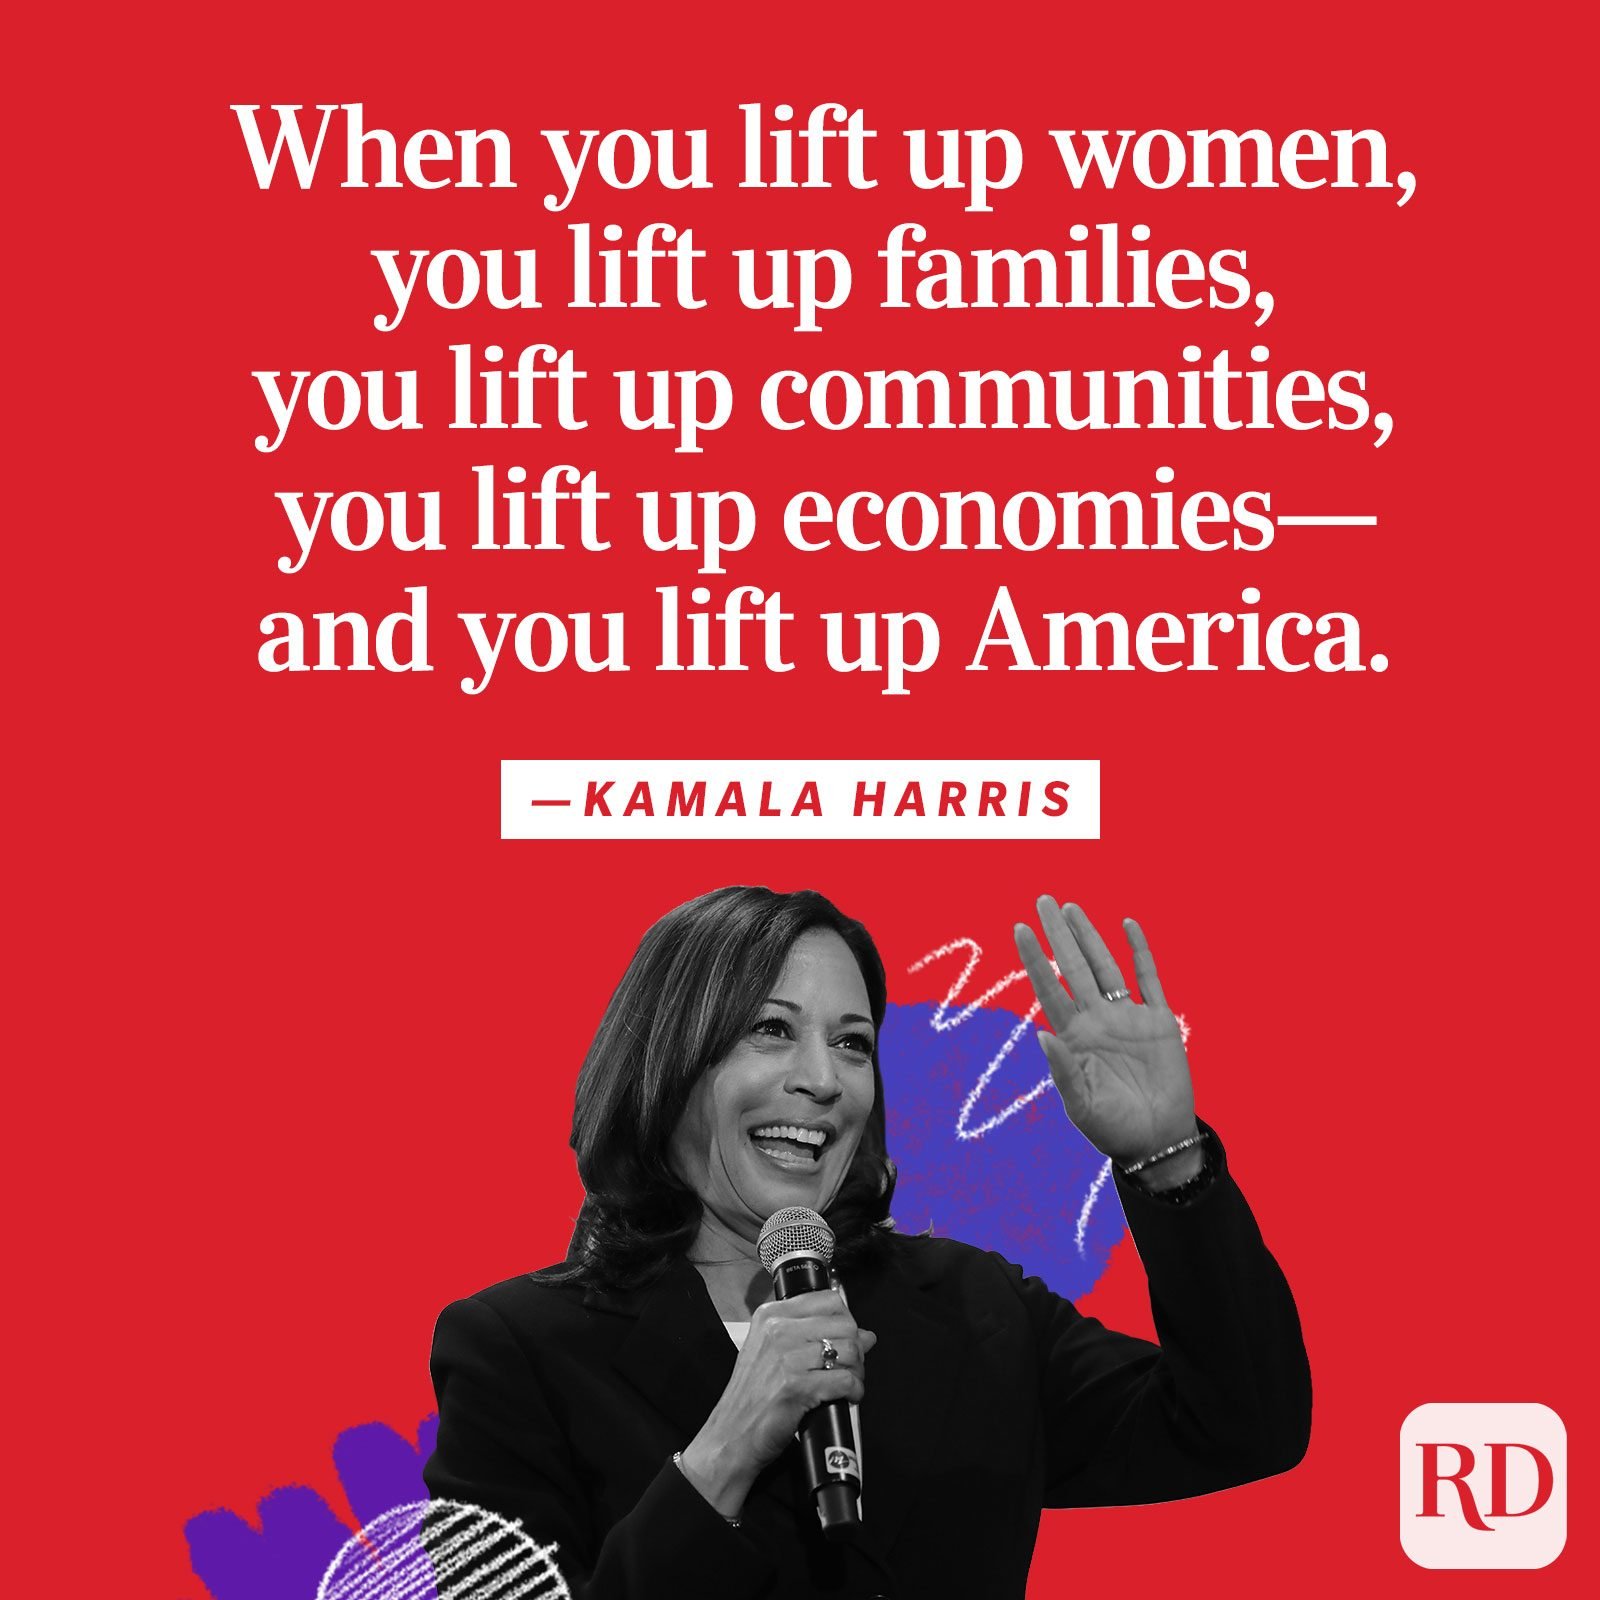 "When you lift up women, you lift up families, you lift up communities, you lift up economies—and you lift up America."